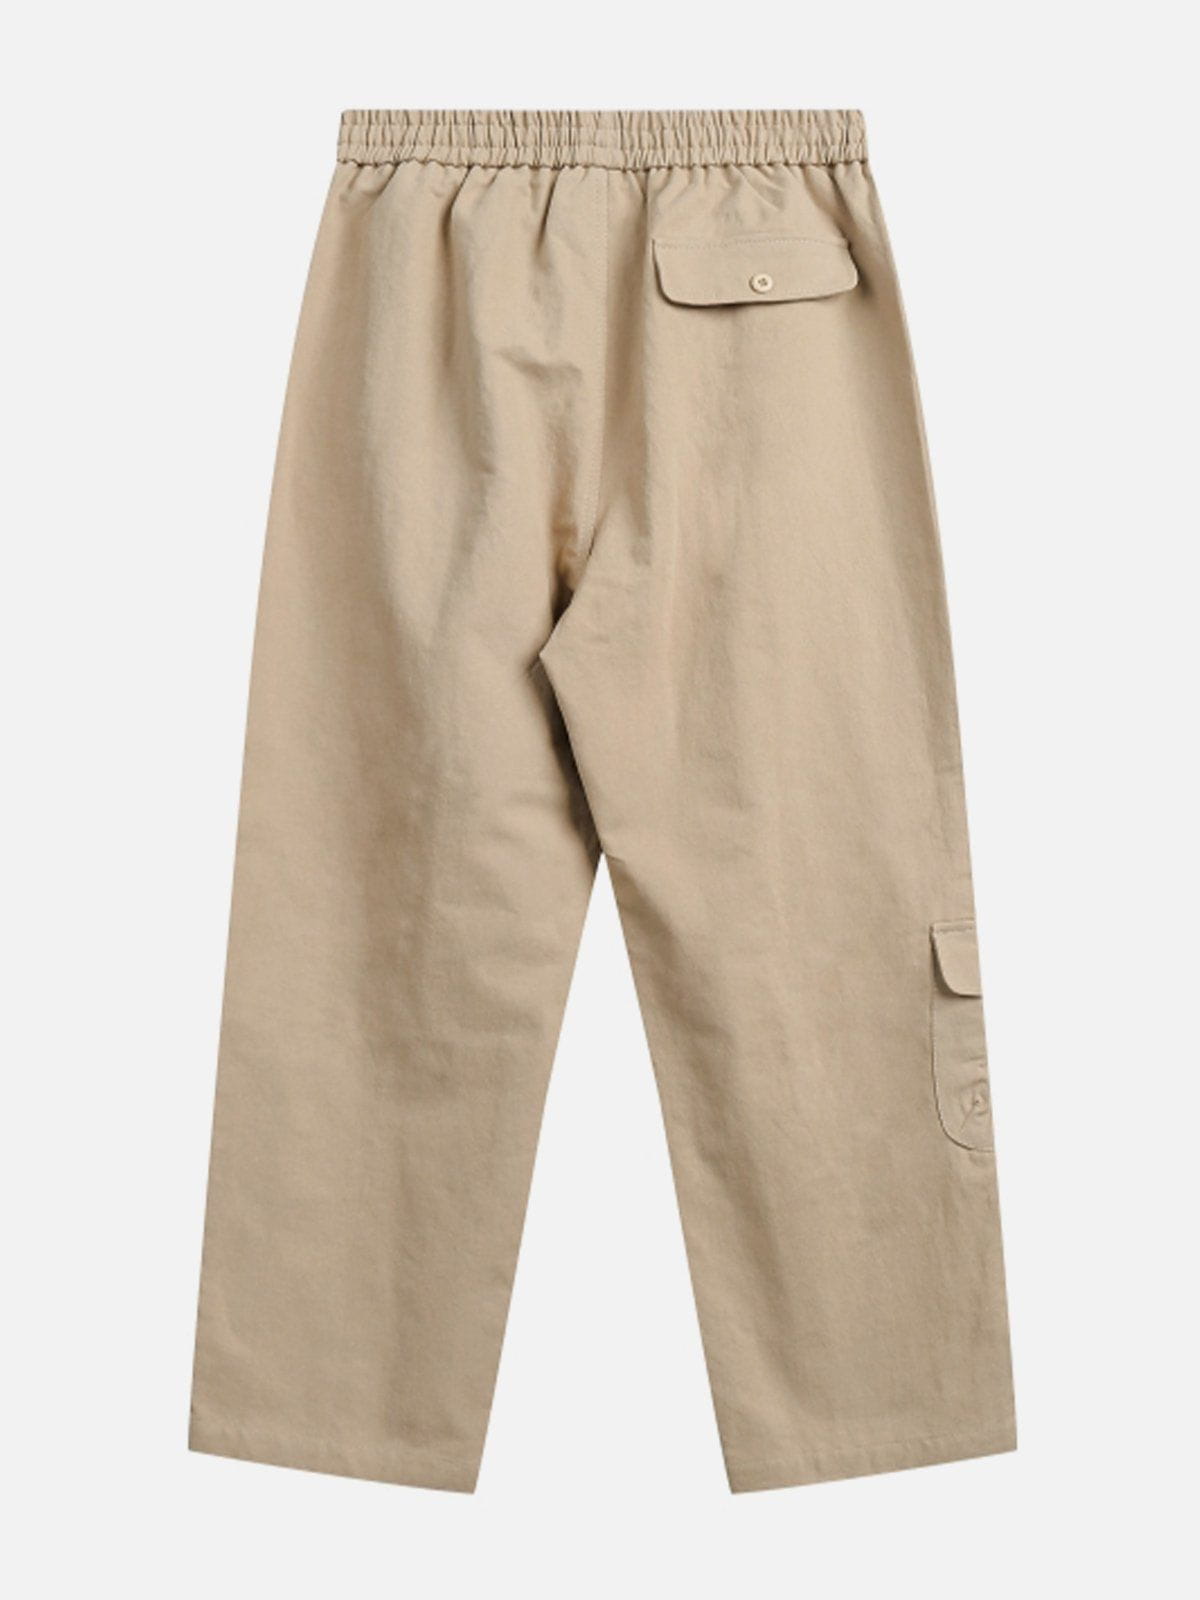 Majesda® - Irregular Pocket Design Cargo Pants outfit ideas streetwear fashion